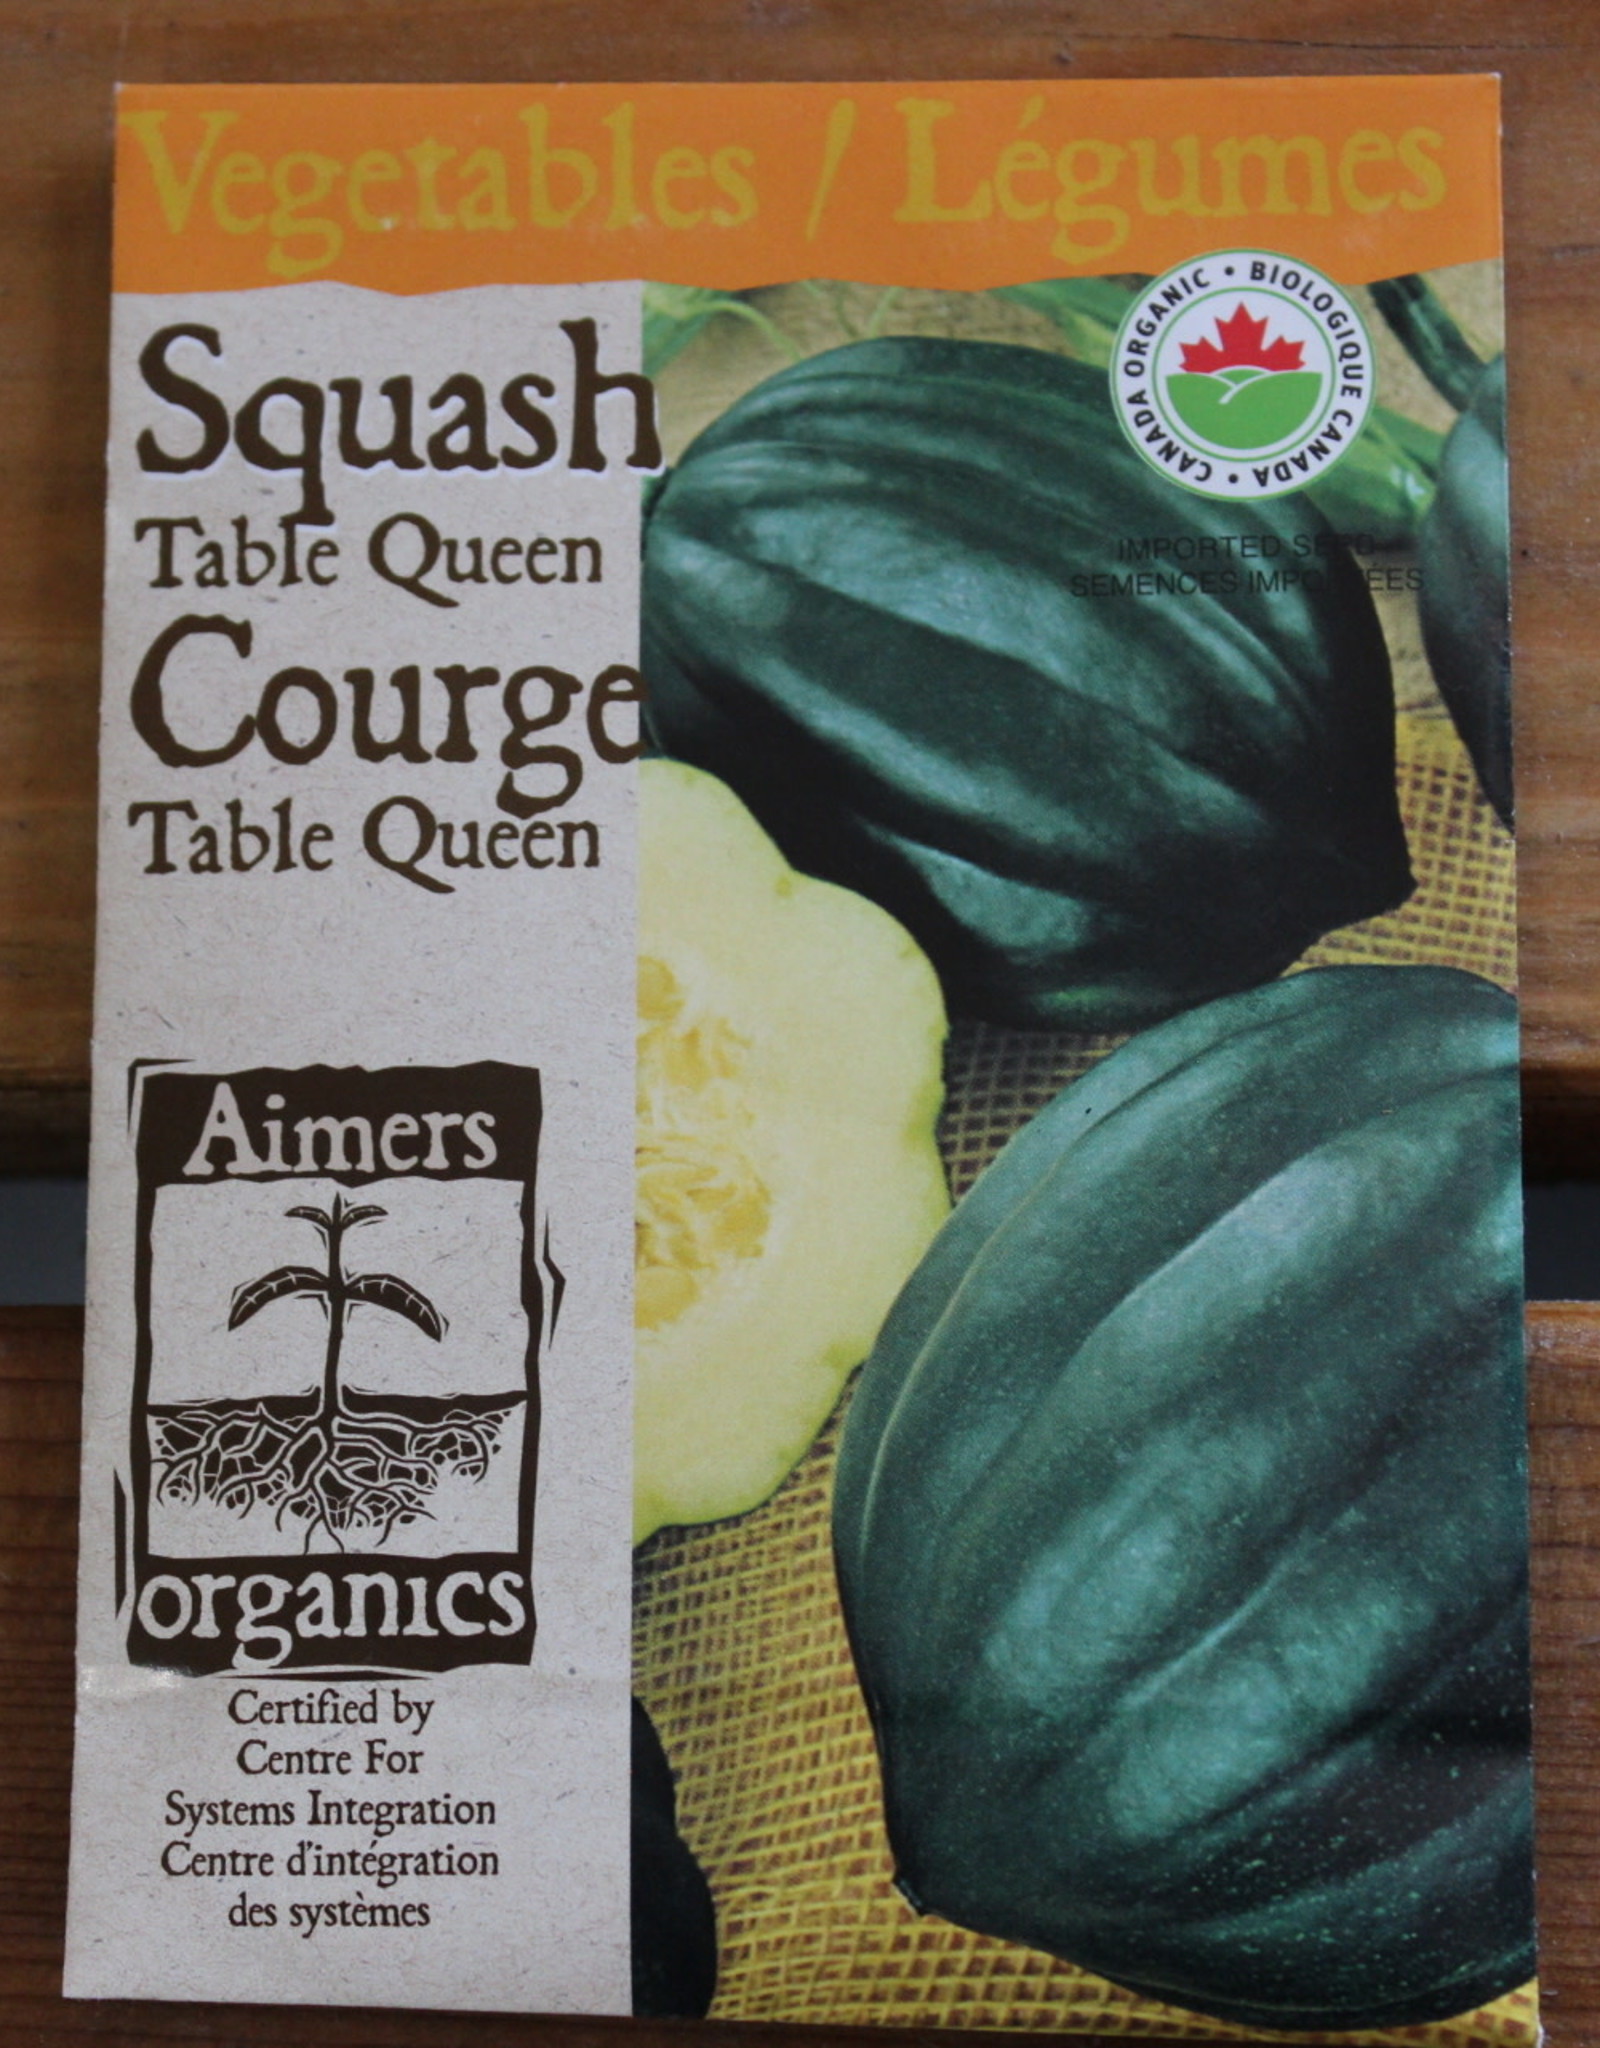 Aimers Squash - Table Queen